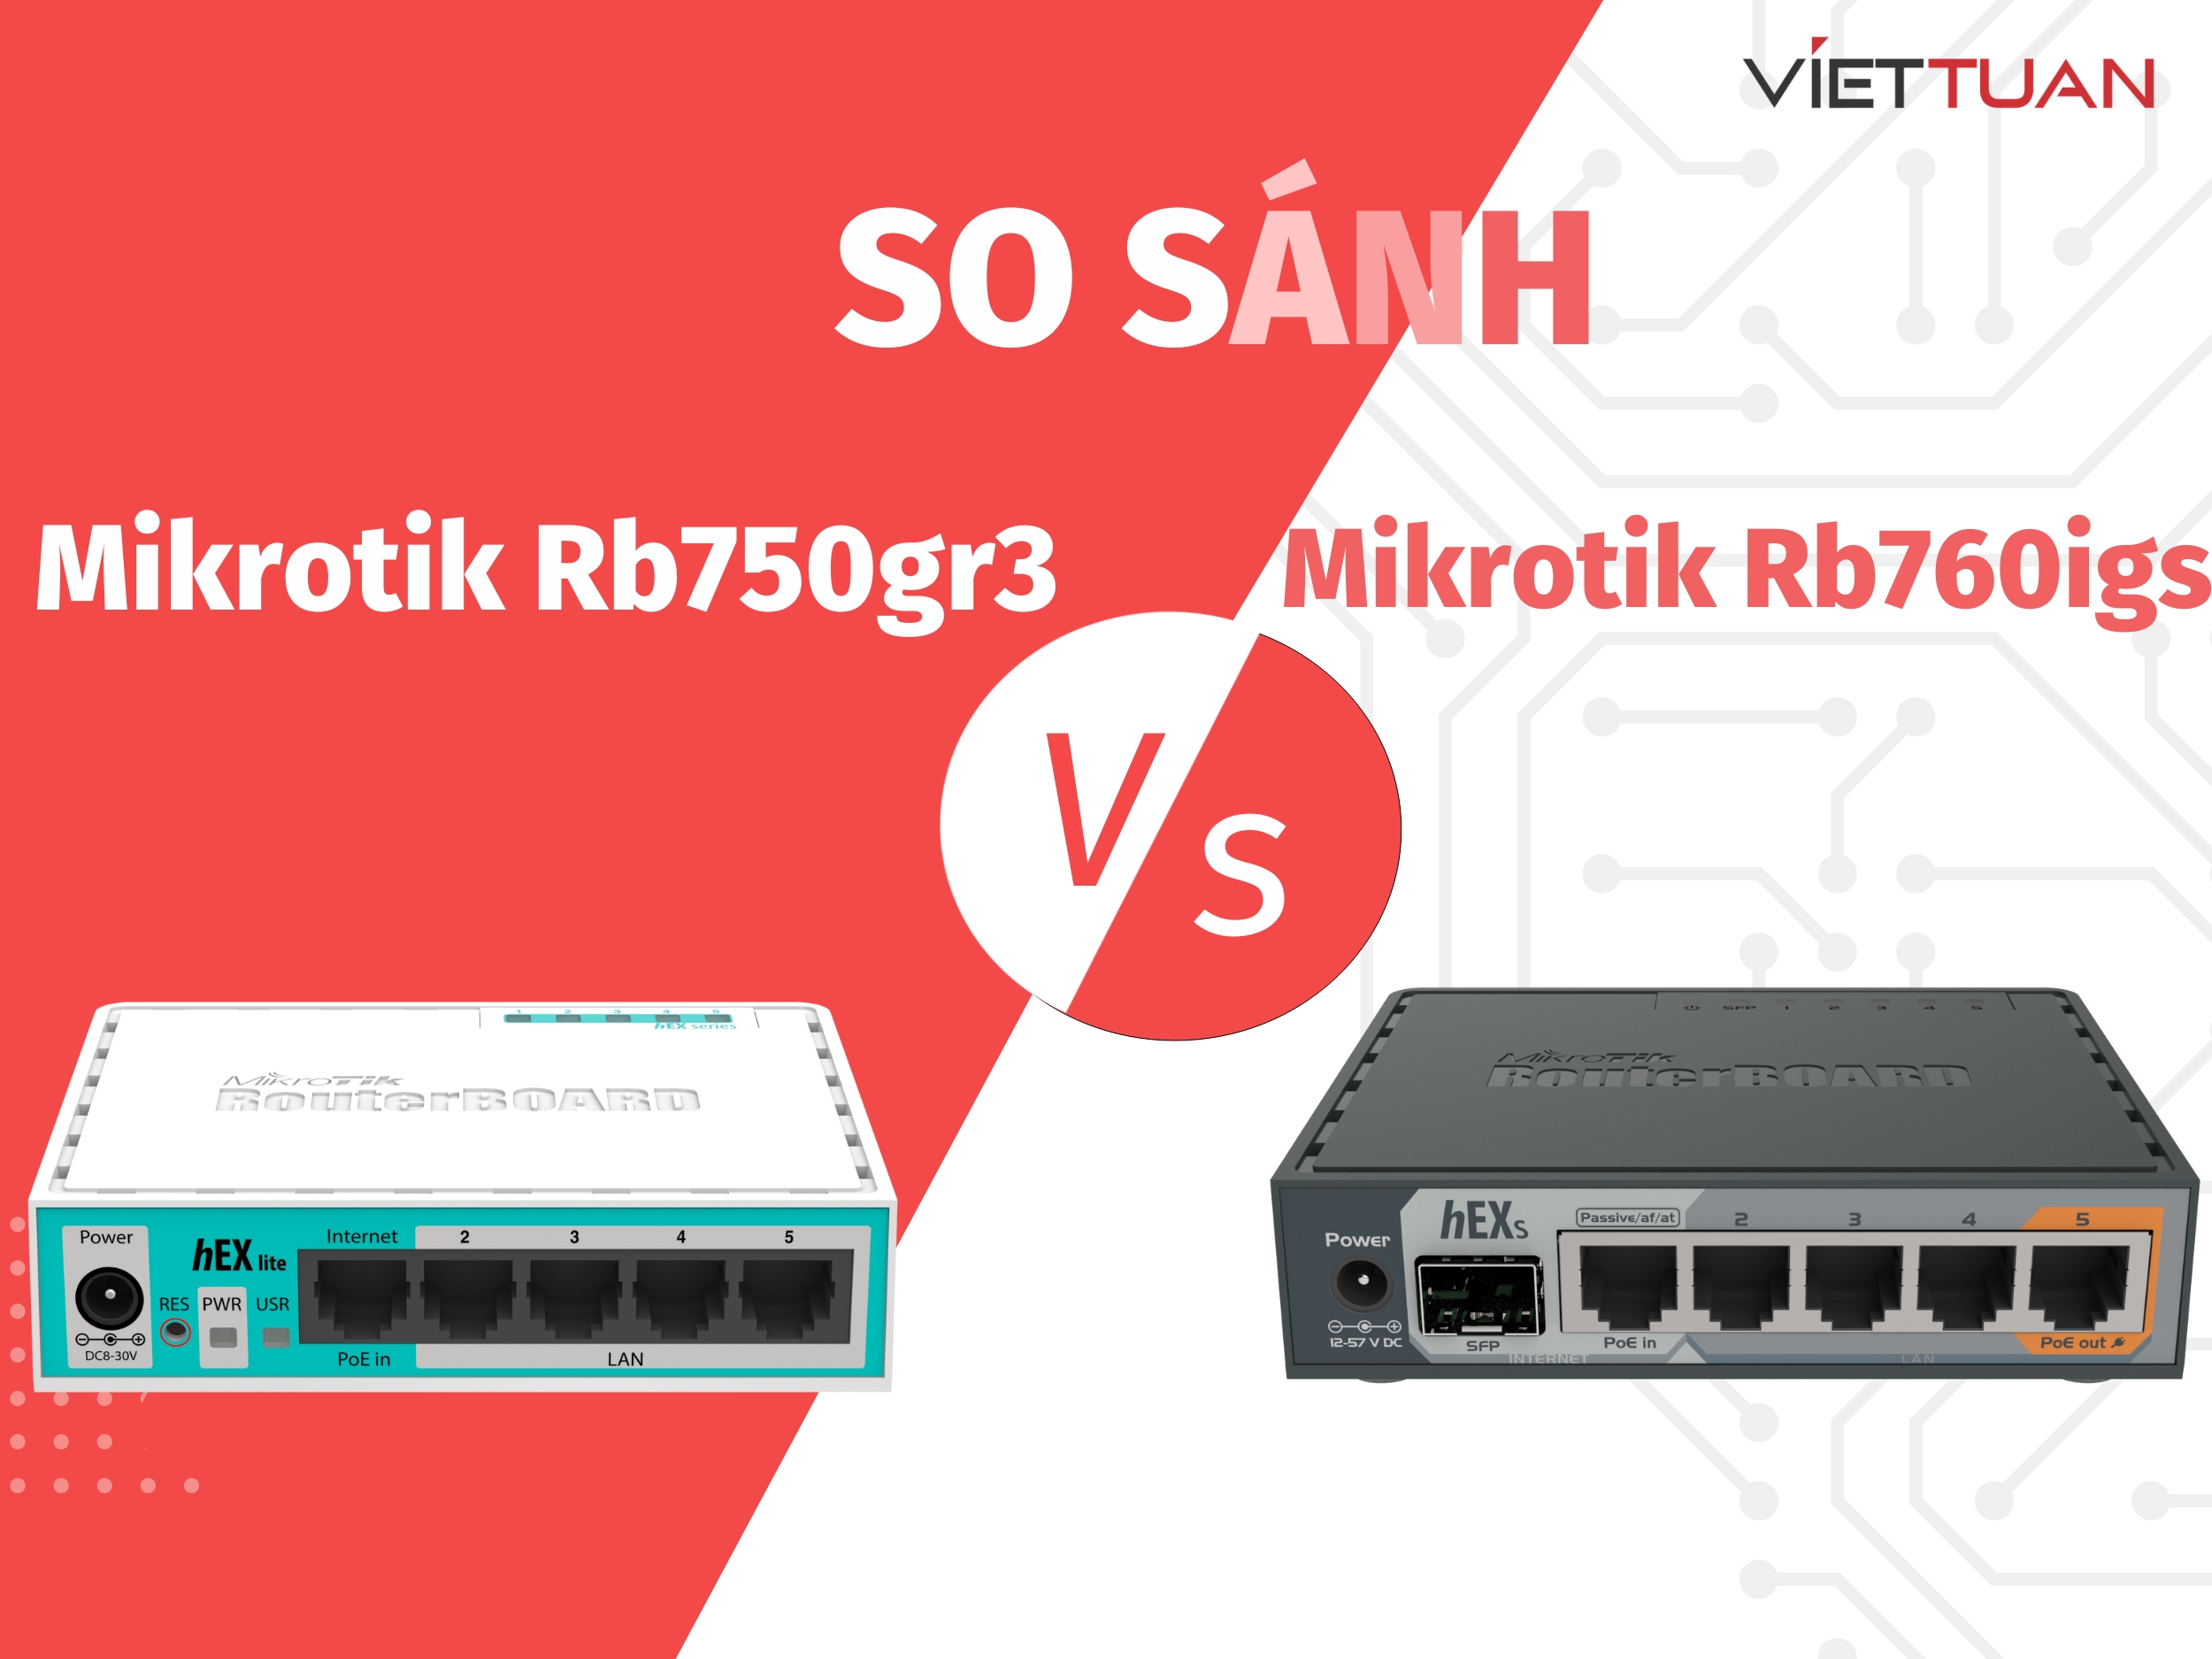 So sánh Router Mikrotik Rb760igs Và Router Mikrotik Rb750gr3